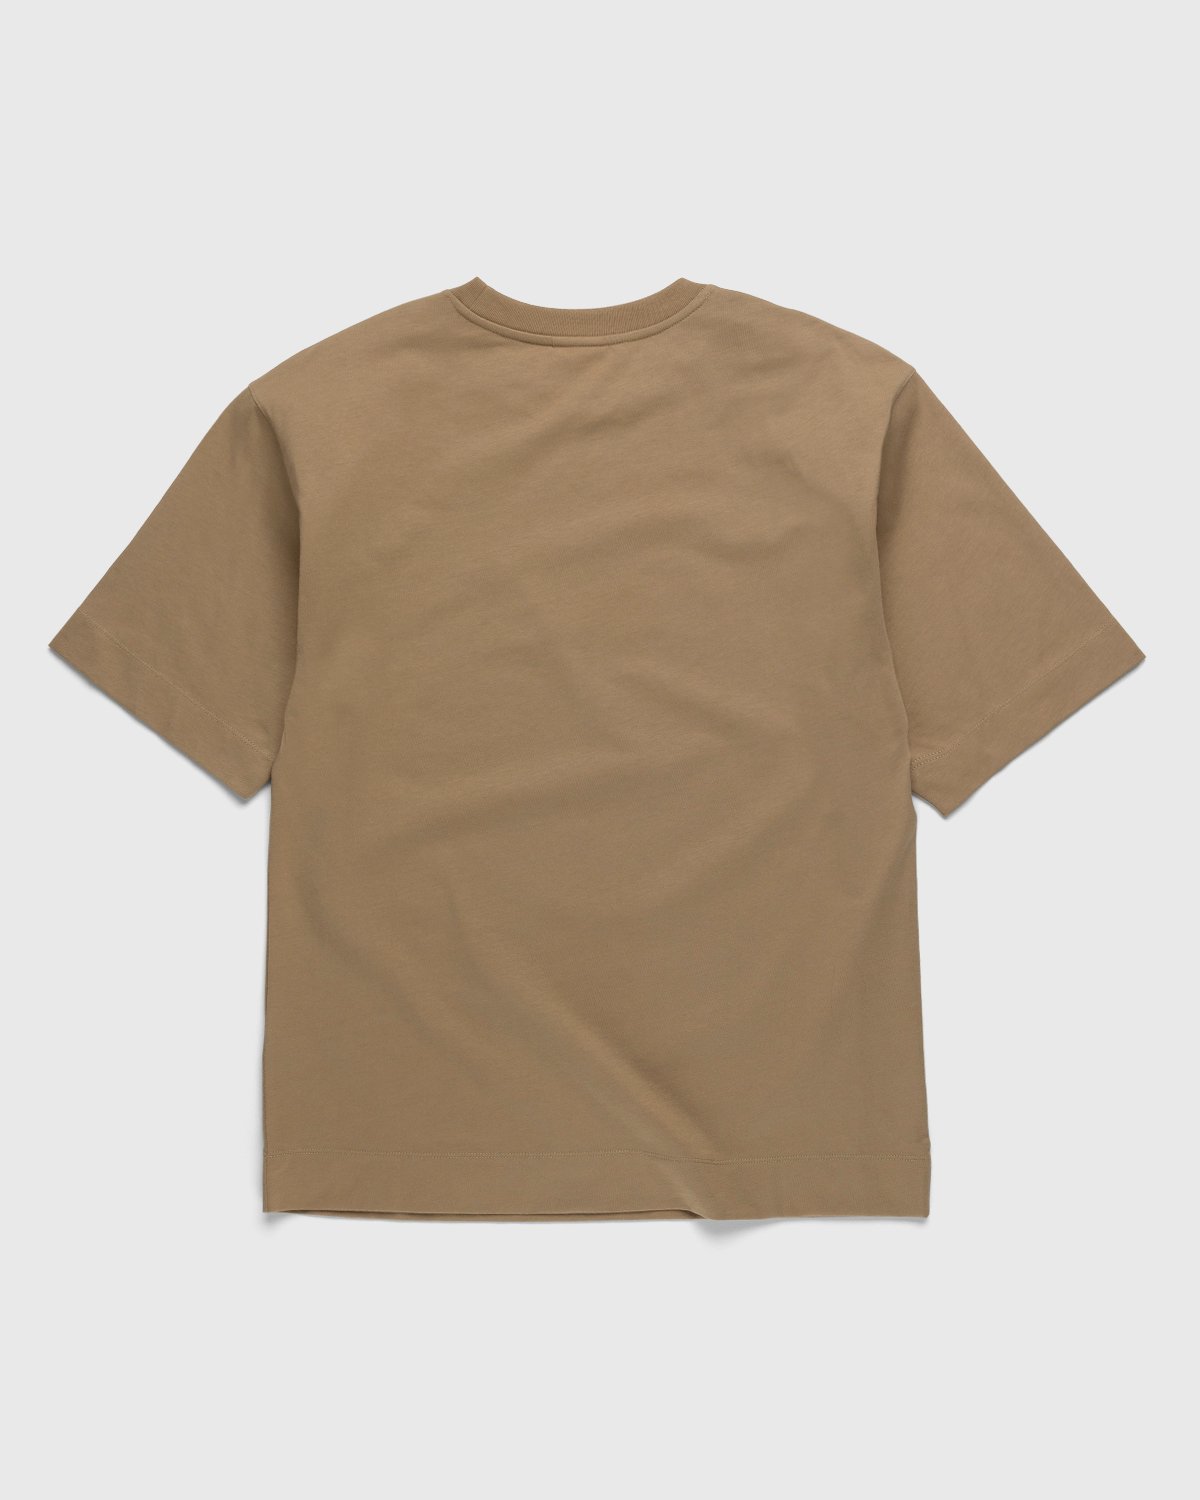 Dries van Noten - Heli Graphic T-Shirt Sand - Clothing - Beige - Image 2